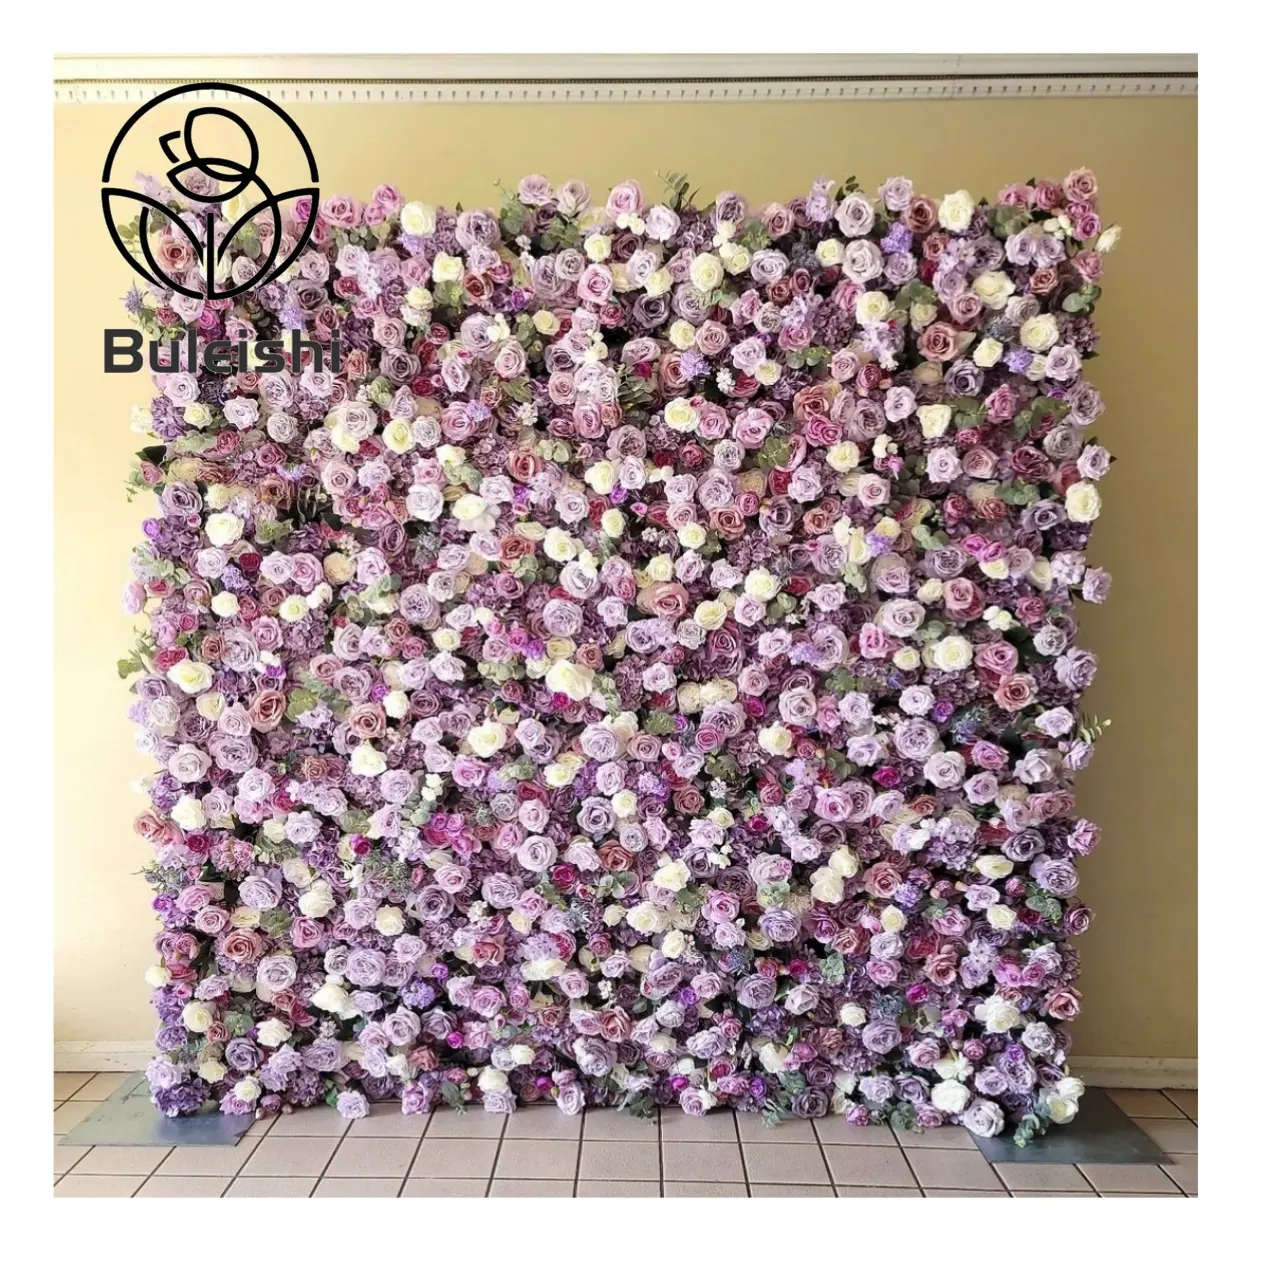 Pared de flores 8ft * 8ft en tela de seda artificial rosa púrpura blanco 3D decoración de la boda Pared de flores